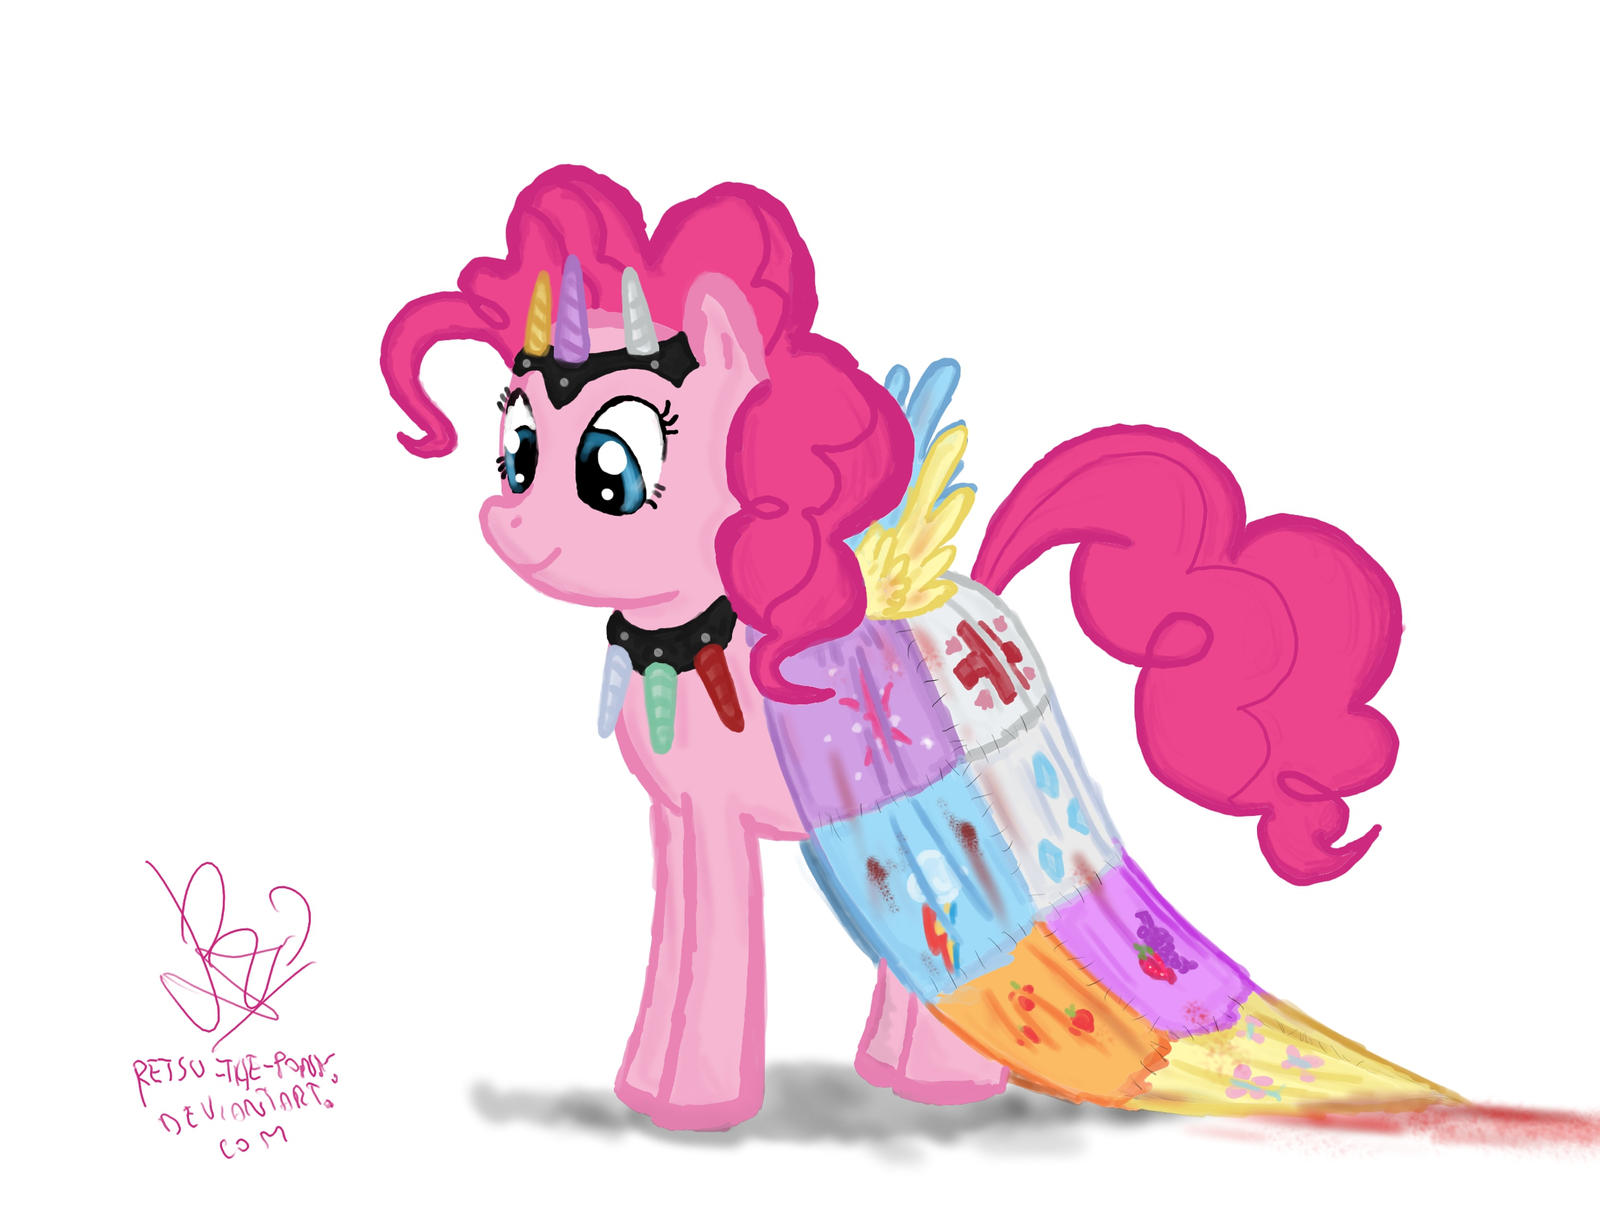 cupcakes_pinkie_pie_by_retsu_the_pony-d4